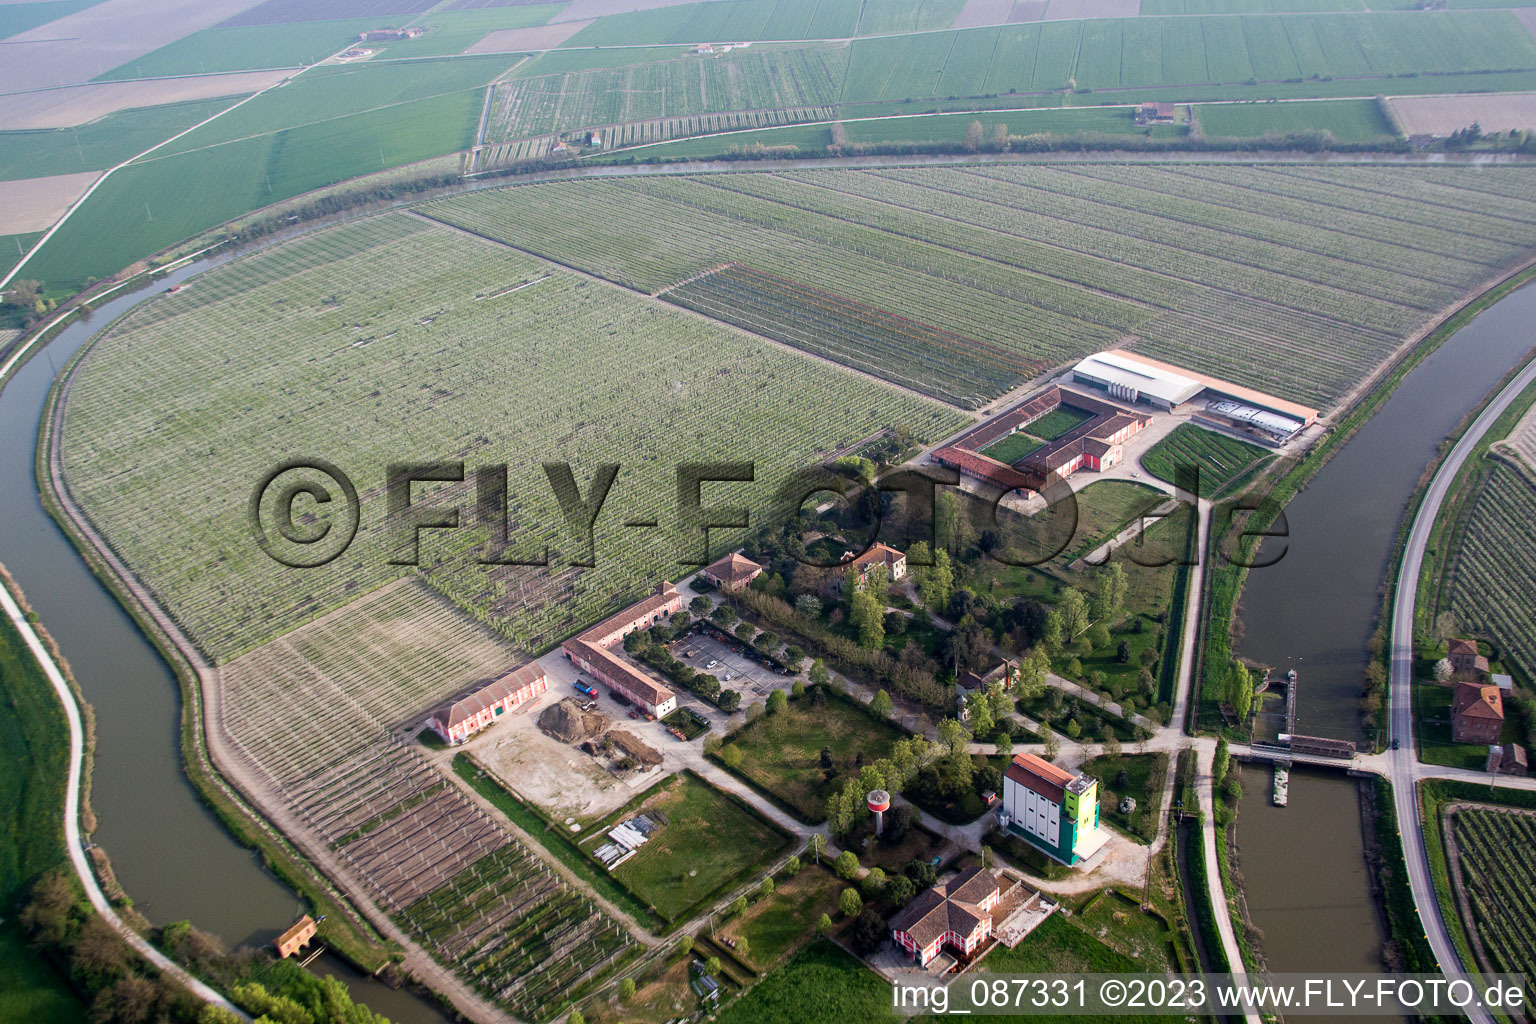 Luftbild von Lodigiana(I-Emilia-Romagna), Italien